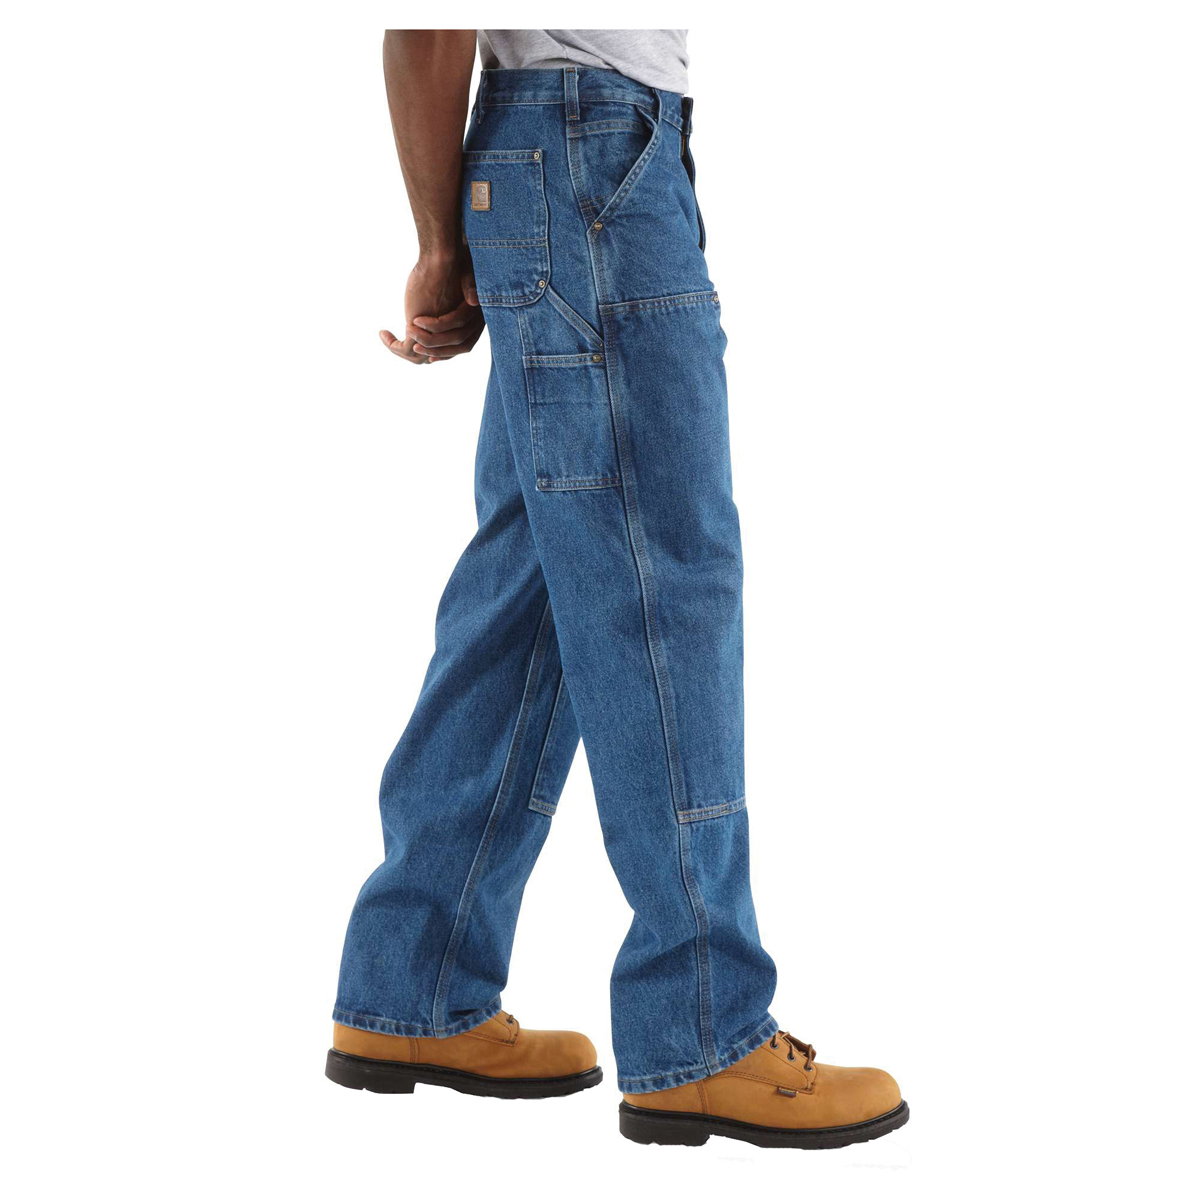 Carhartt B73-DST-40X32 Utility Logger Jeans, 40 in Waist, 32 in L Inseam, Darkstone, Loose Fit - 7